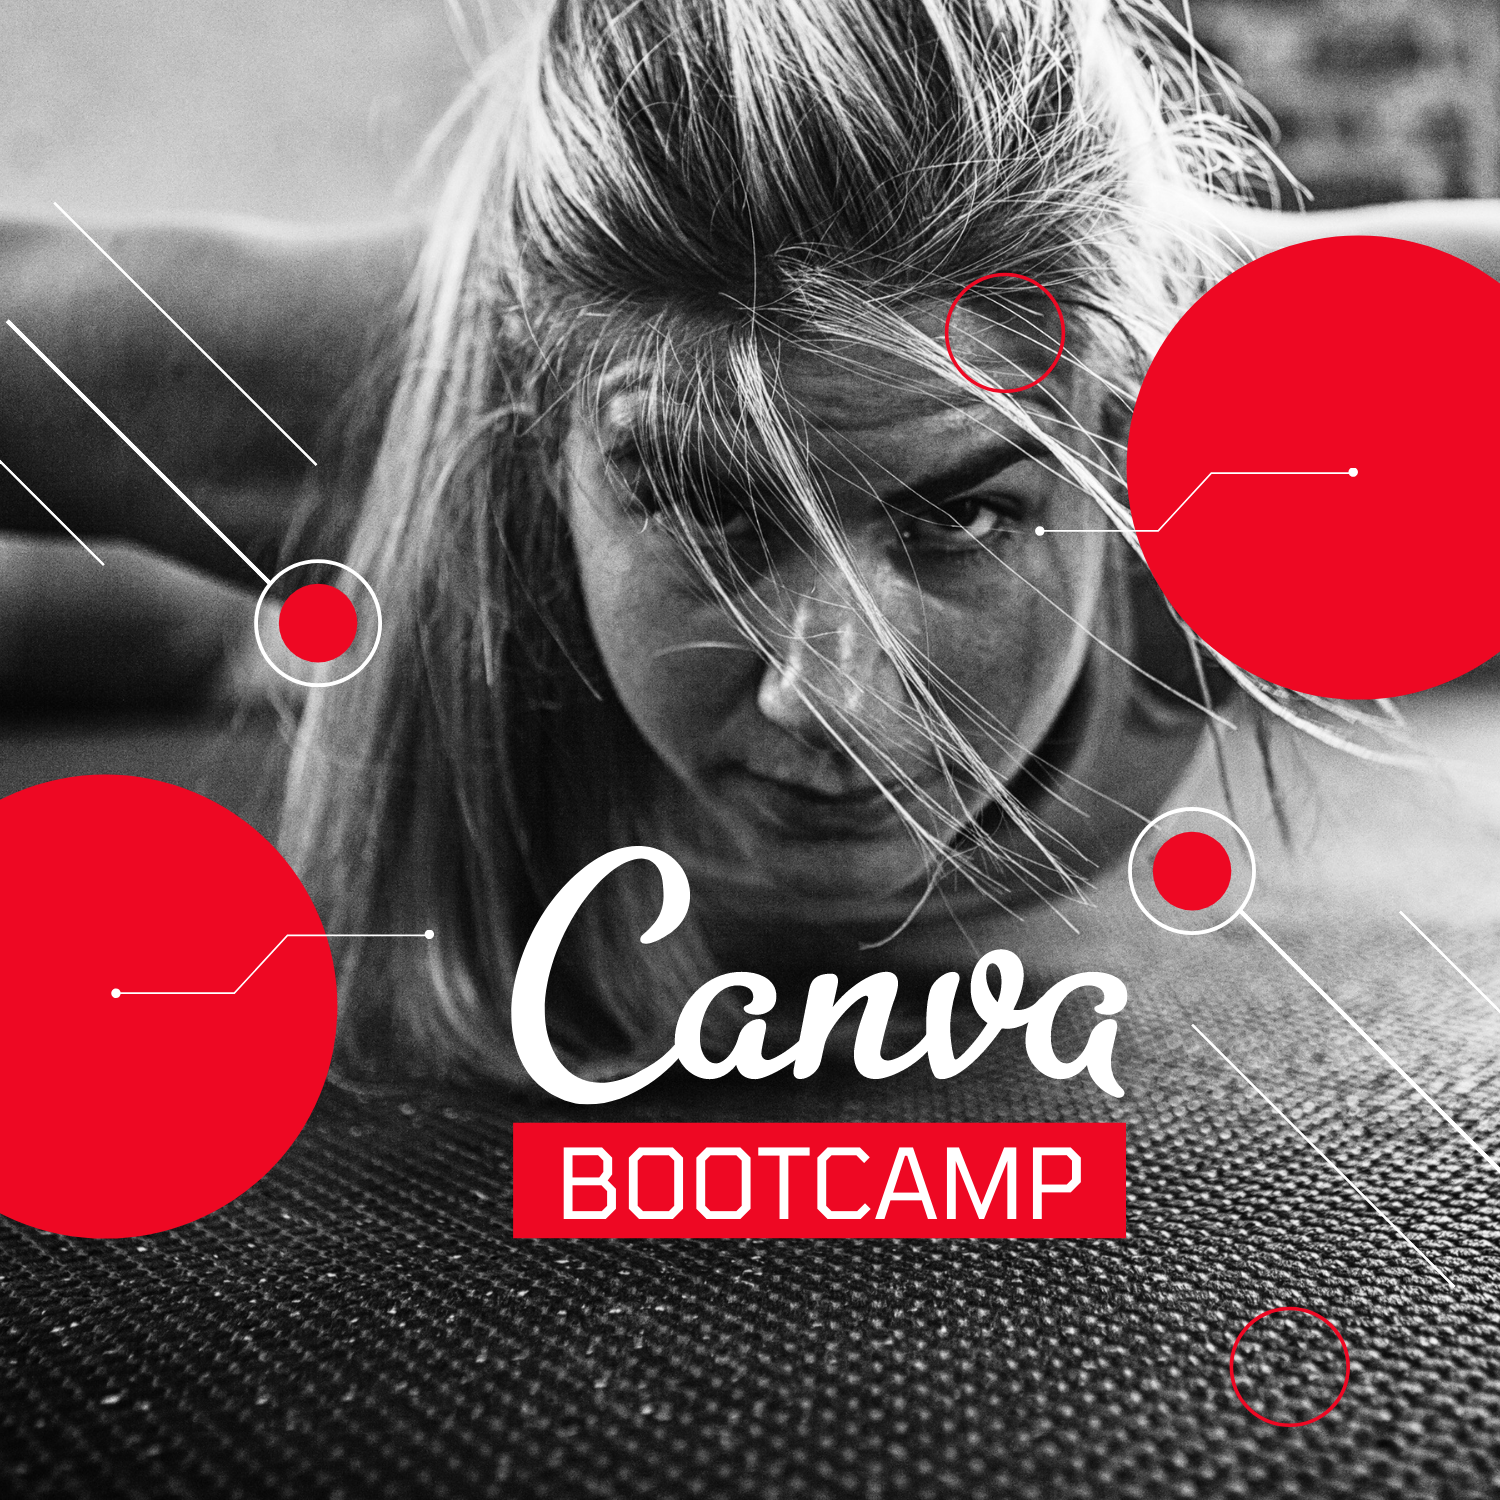 Canva bootcamp